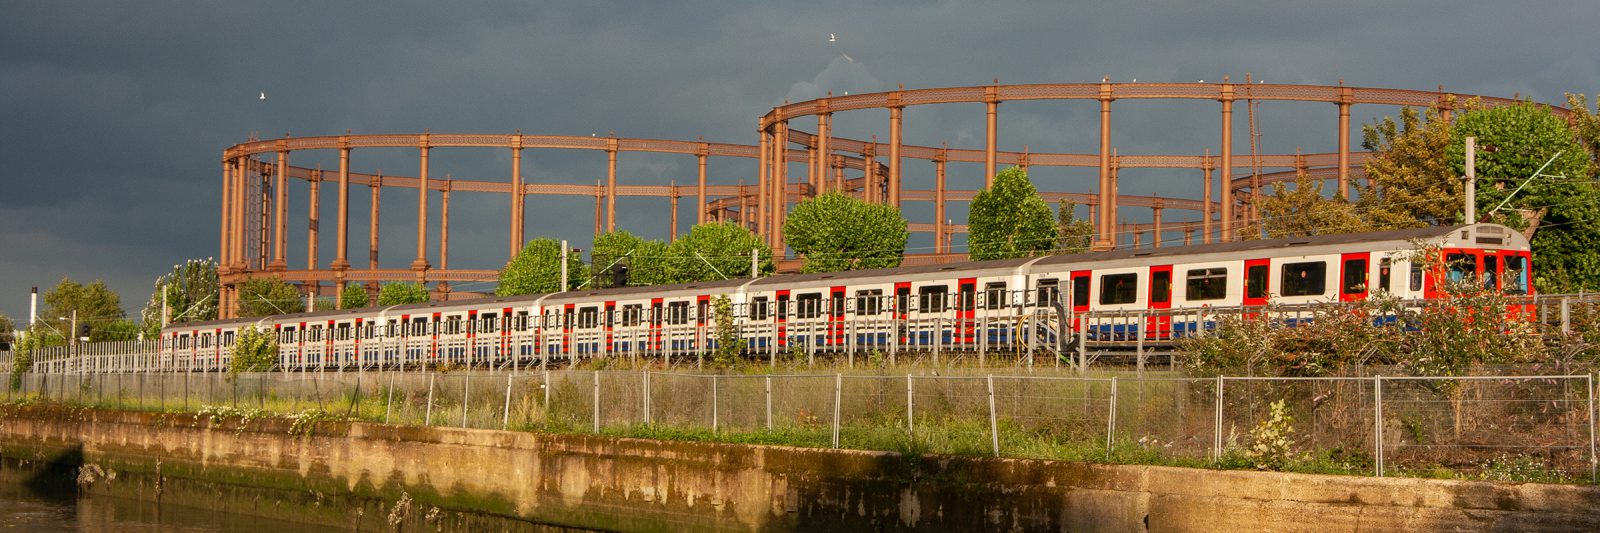 A District Line London Underground train near Three Mills, Bow, East London, UK, 2011.